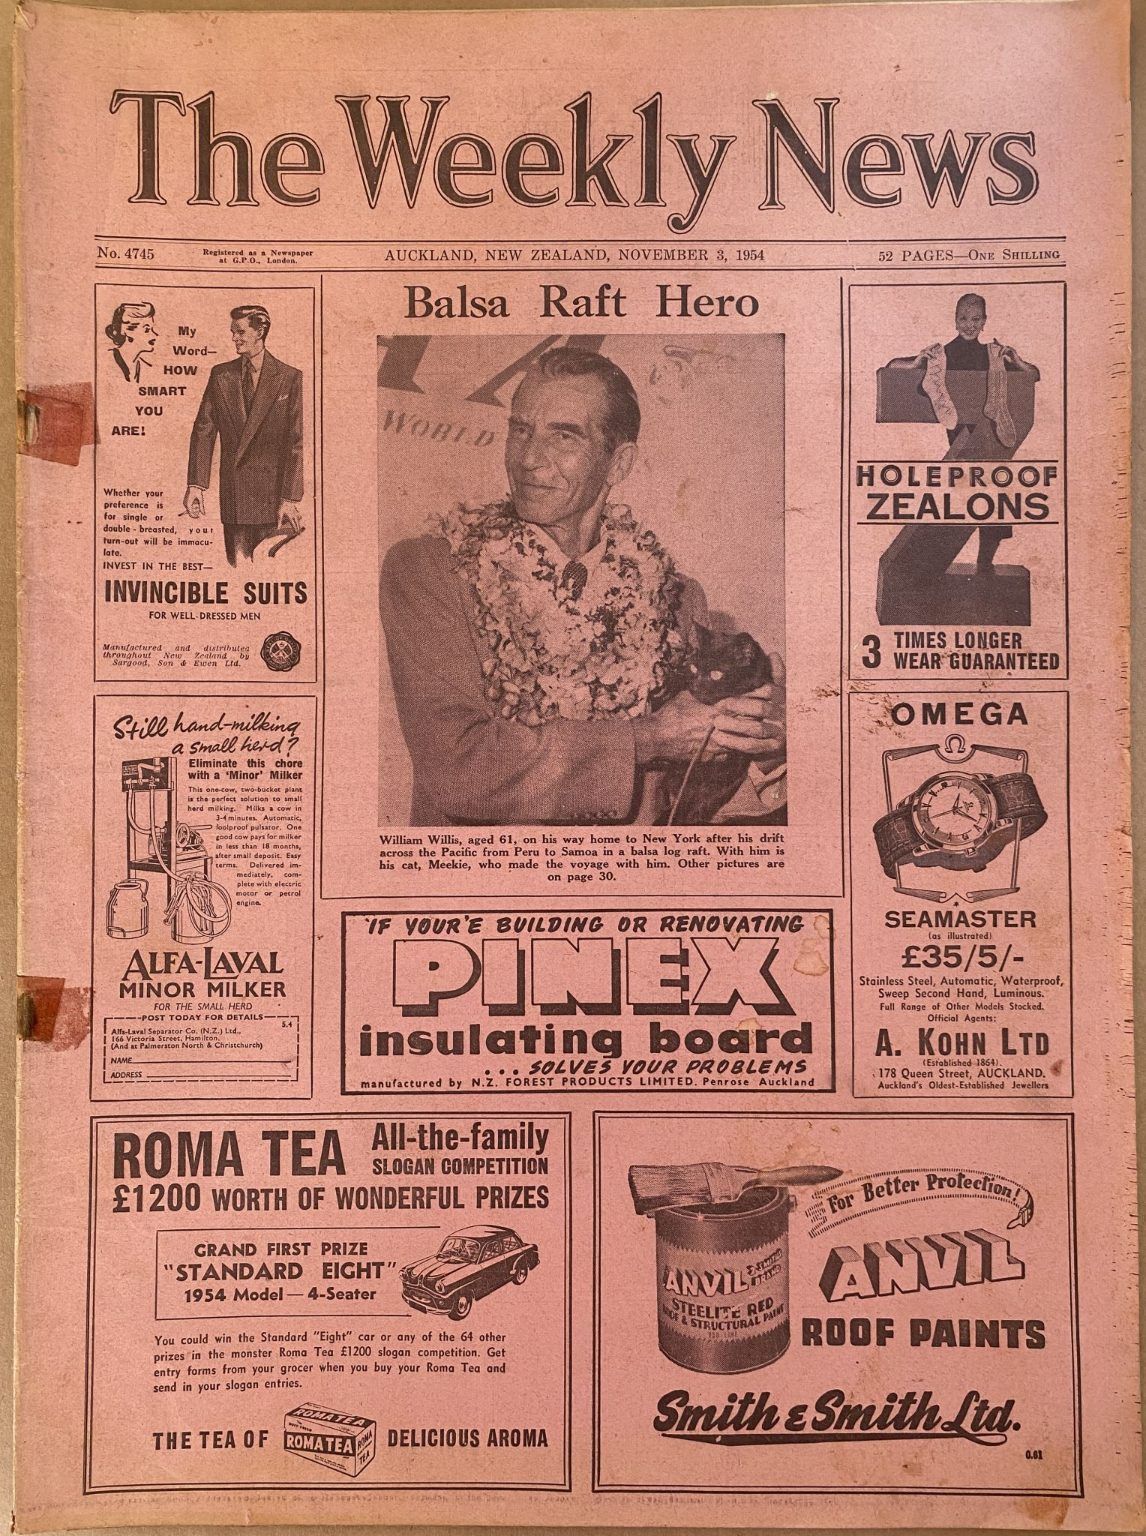 OLD NEWSPAPER: The Weekly News - No. 4745, 3 November 1954